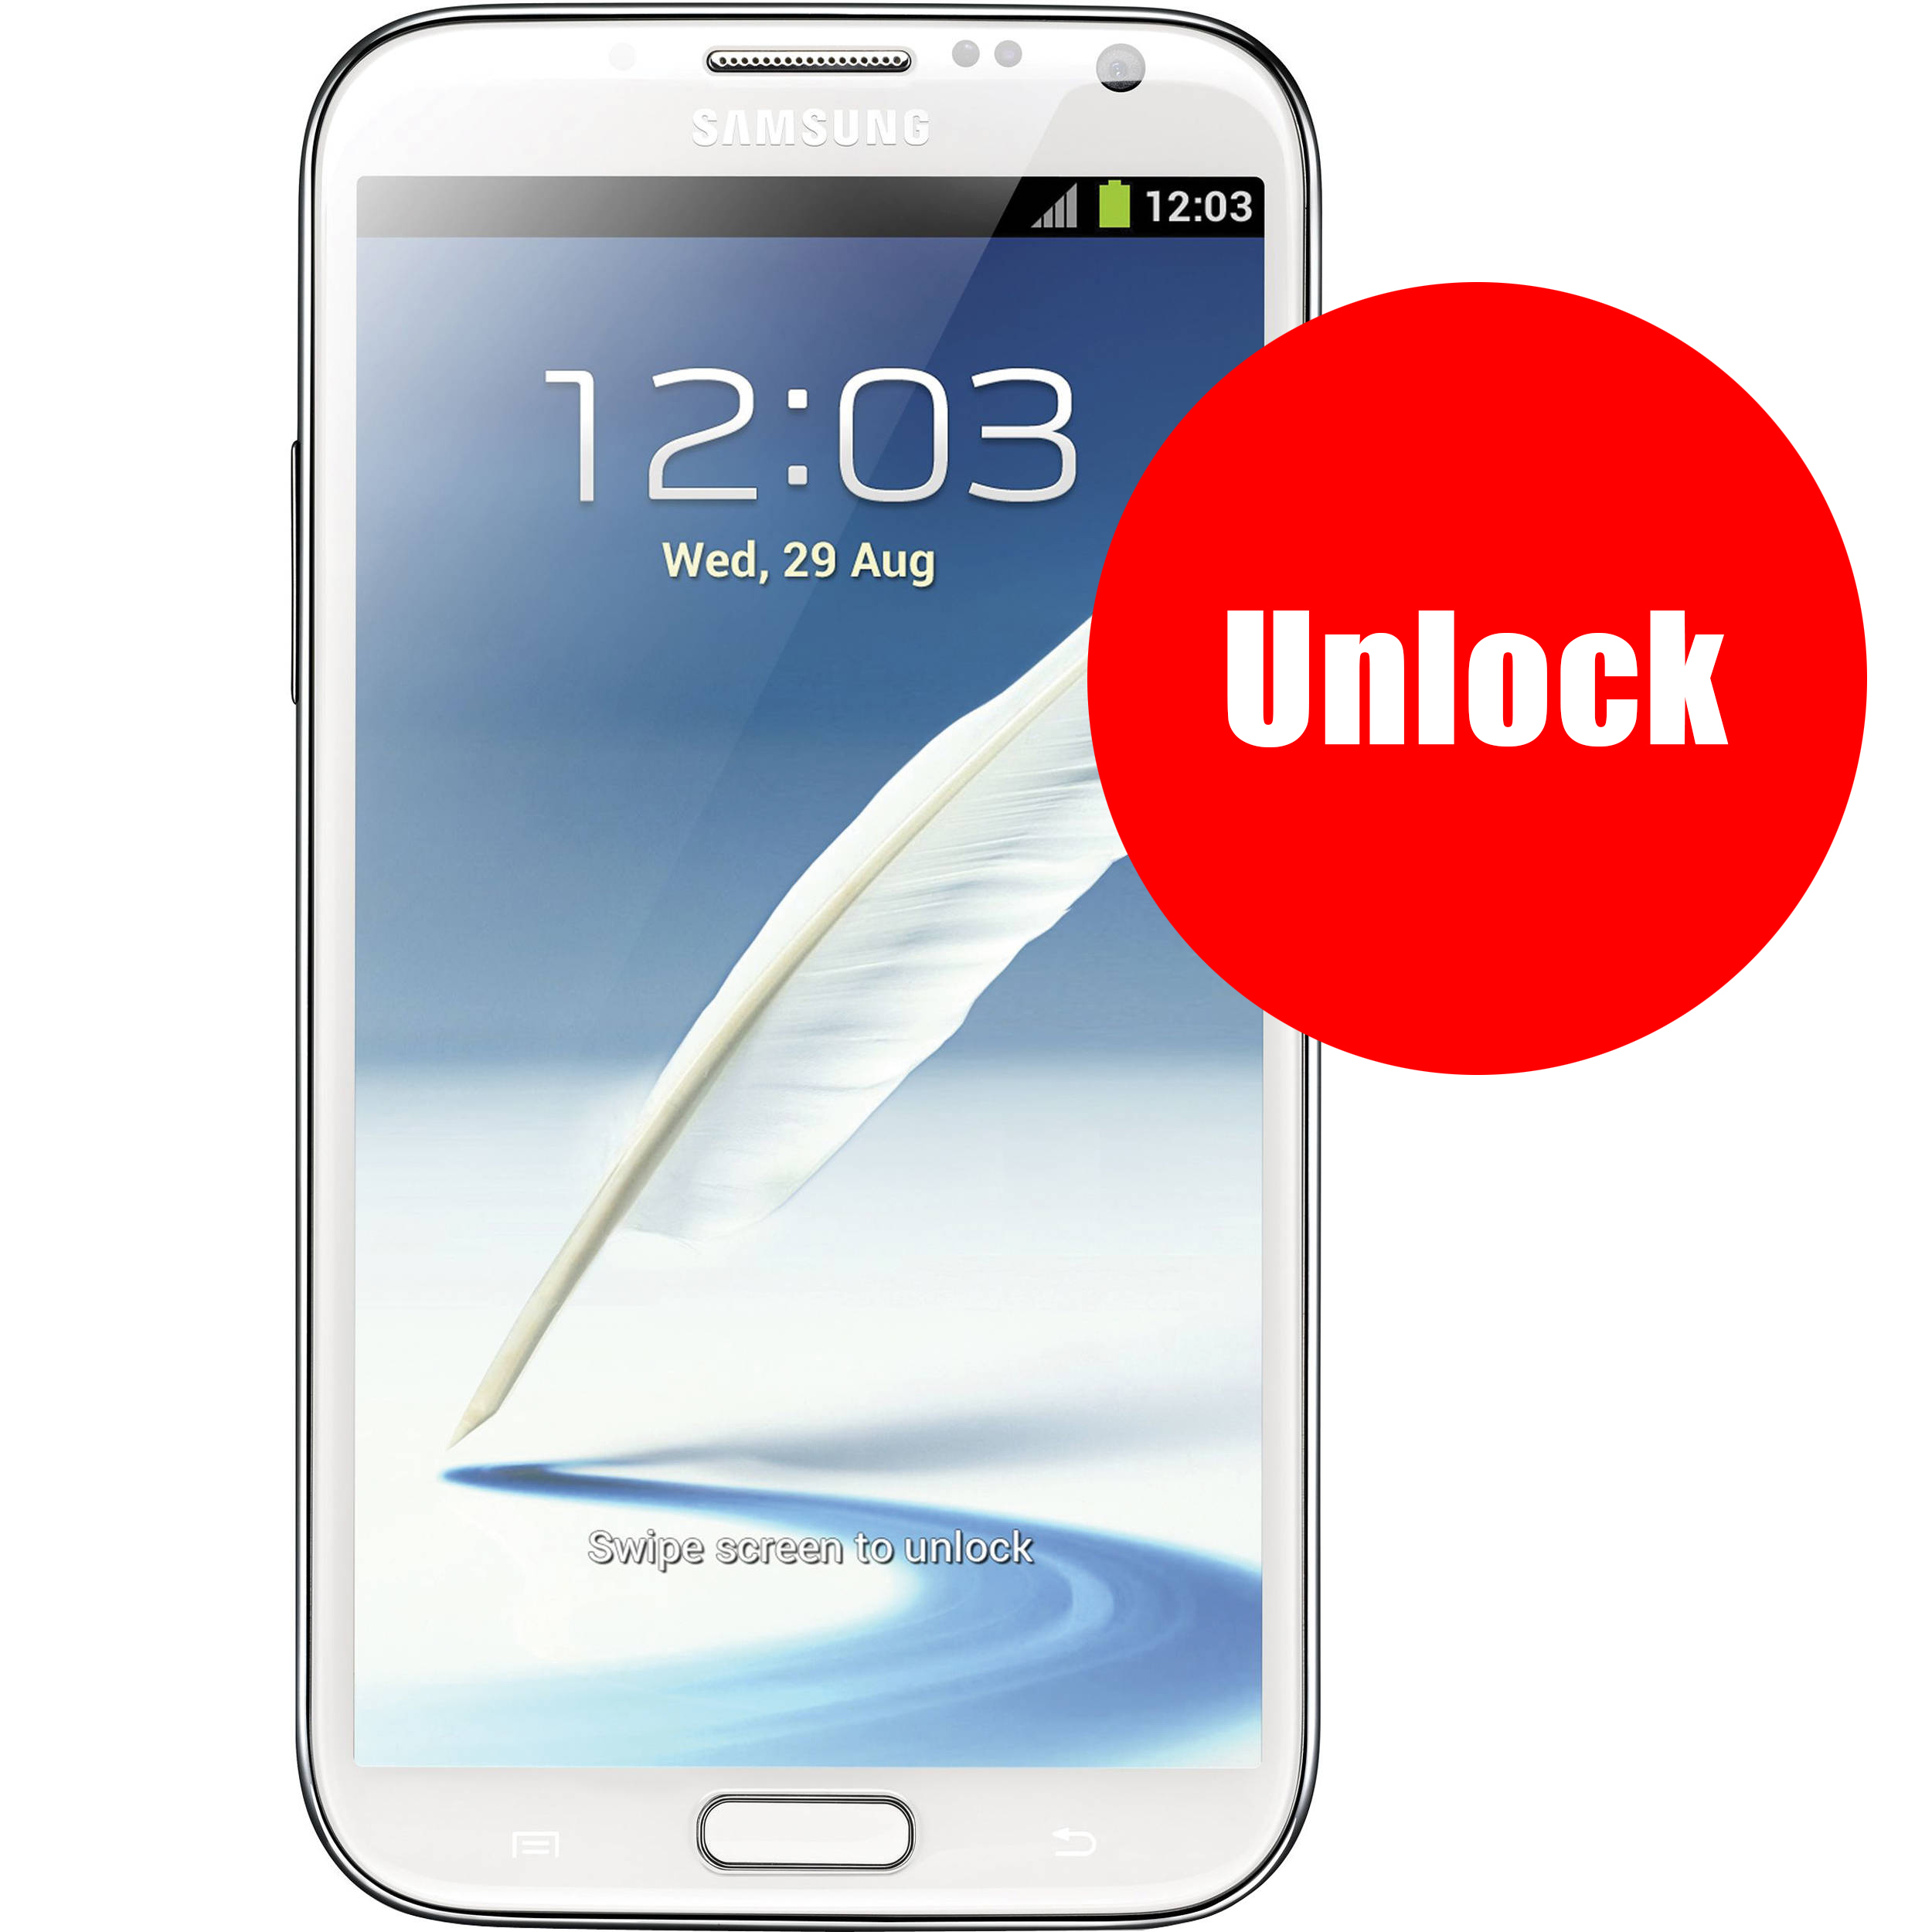 Samsung Galaxy Note 2 Unlock